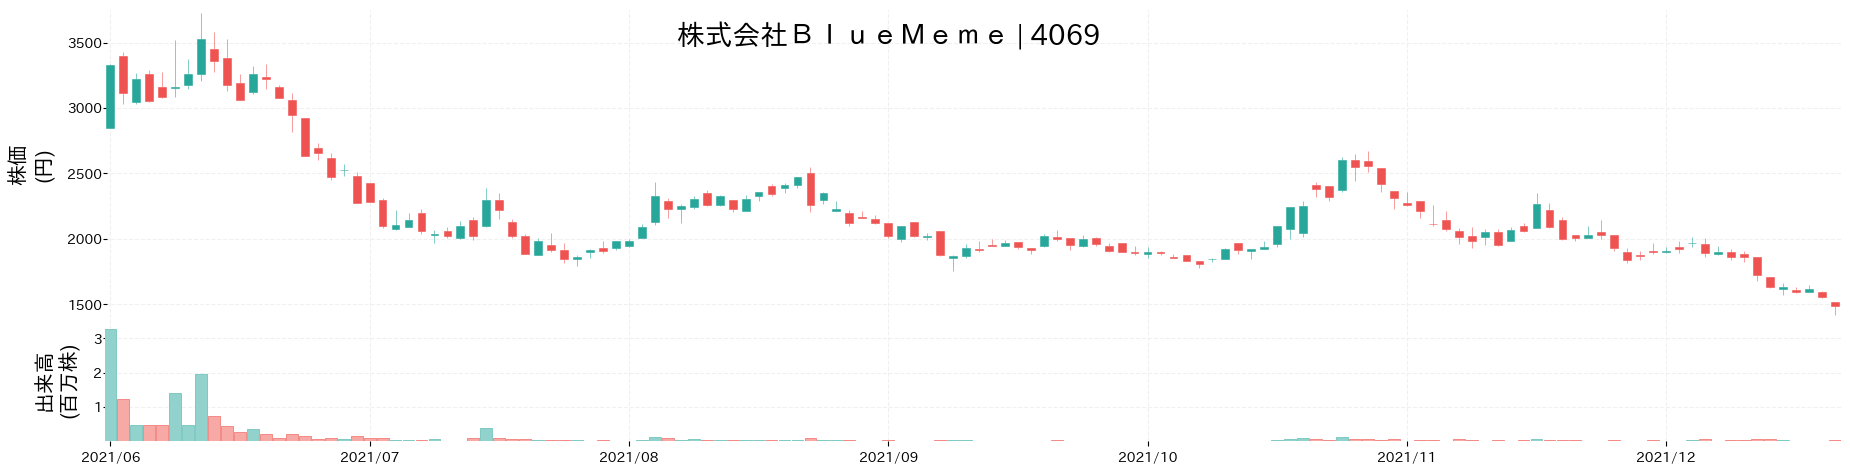 BlueMemeの株価推移(2021)